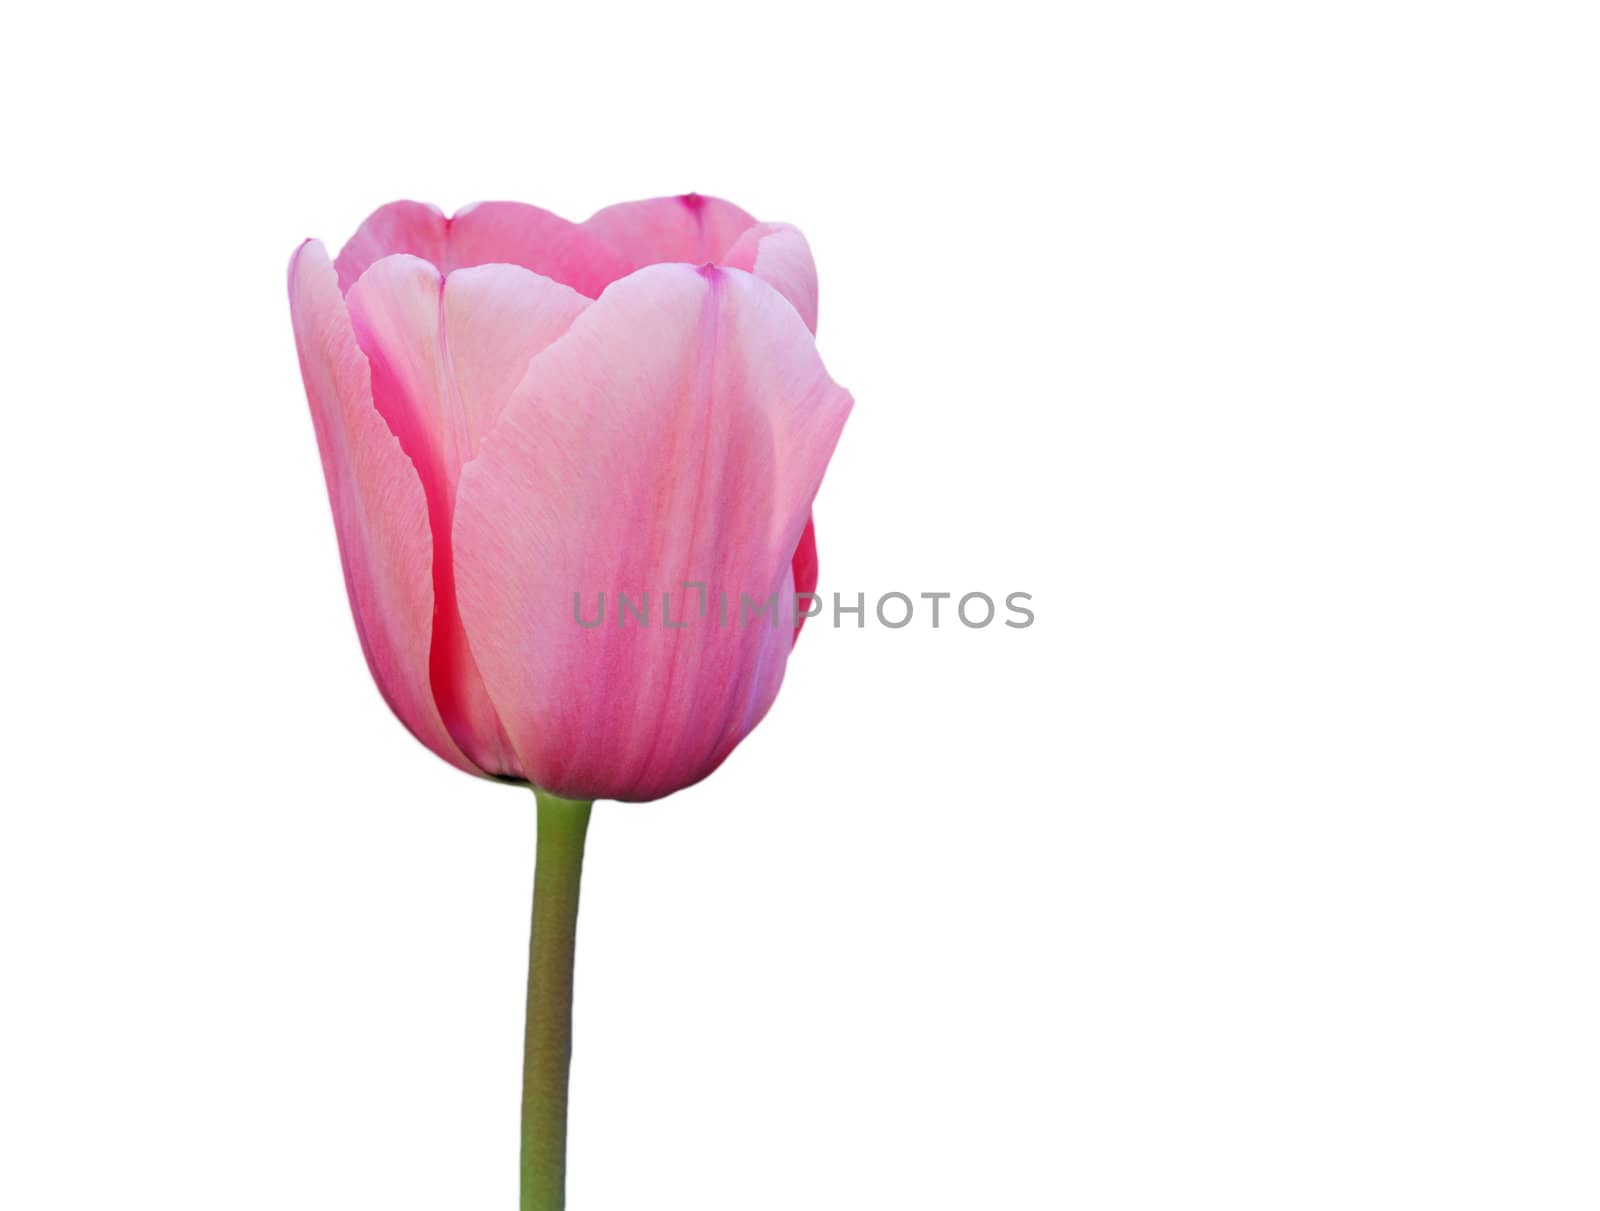 Pink tulip on white background by akarelias